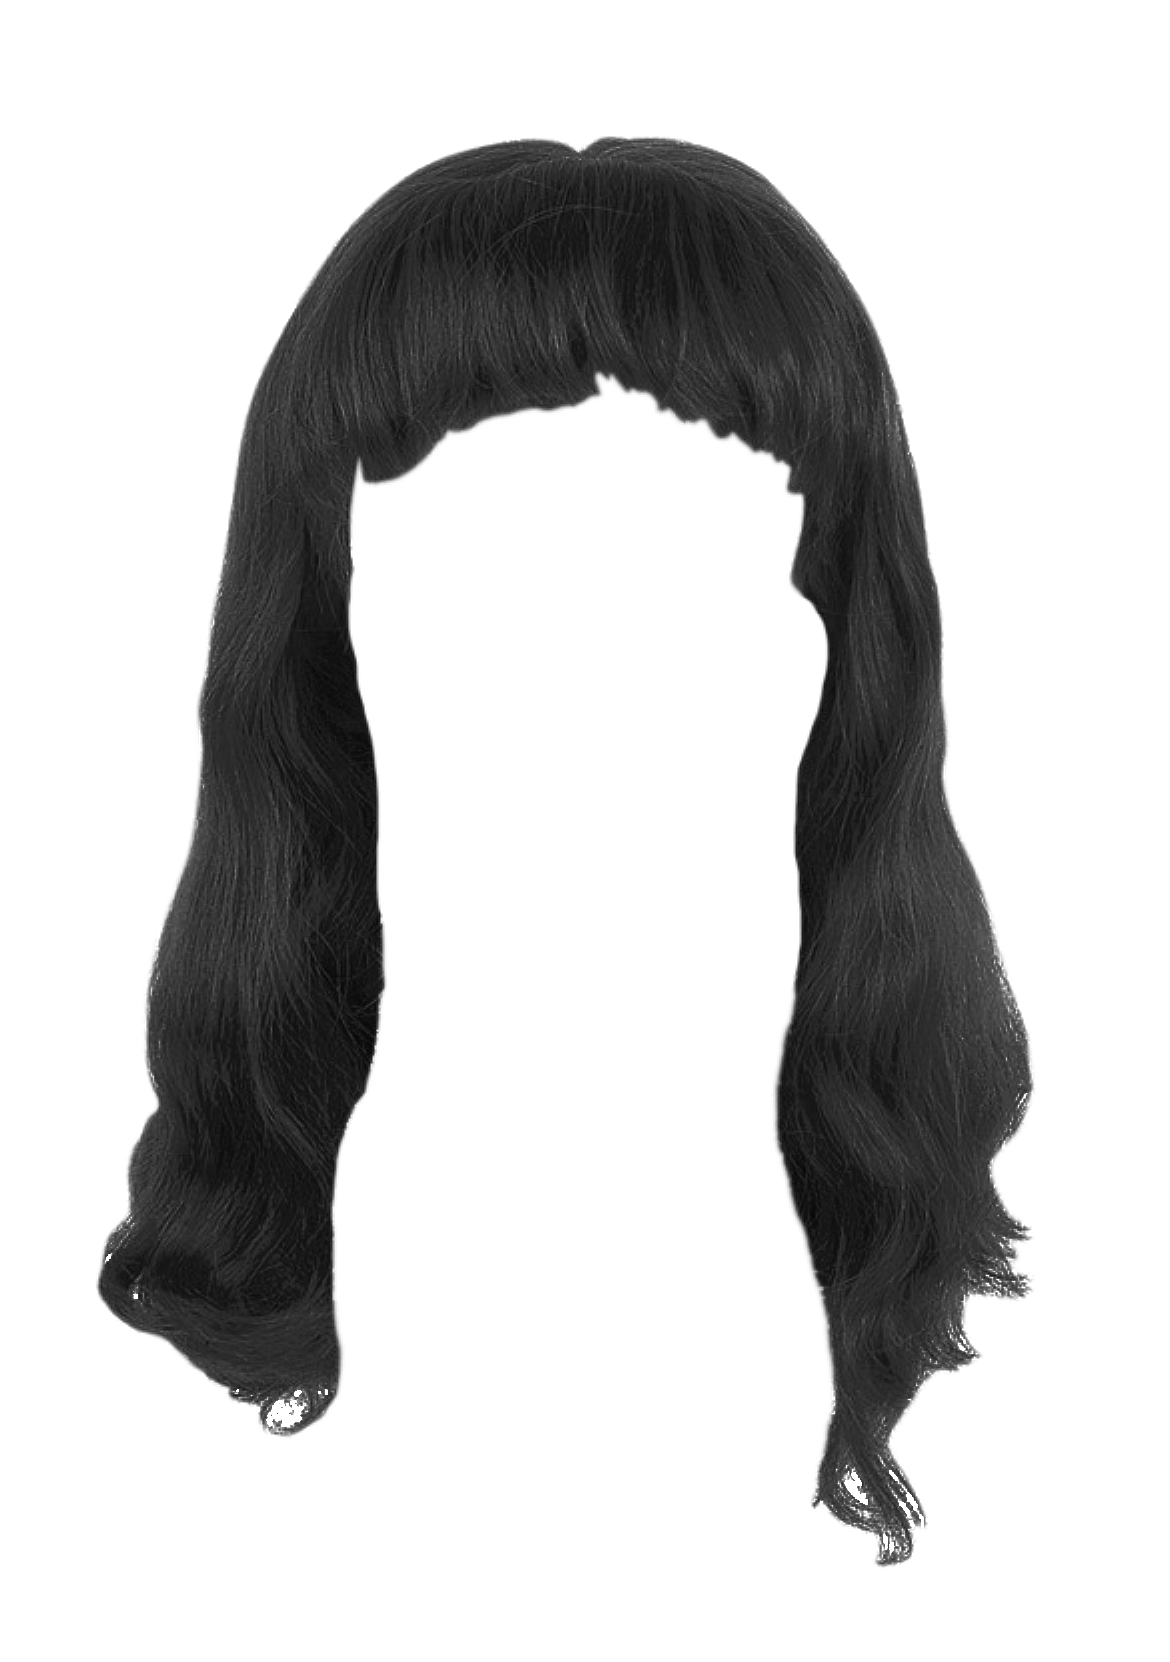 Girl Hair Png Transparent Image - Hair, Transparent background PNG HD thumbnail